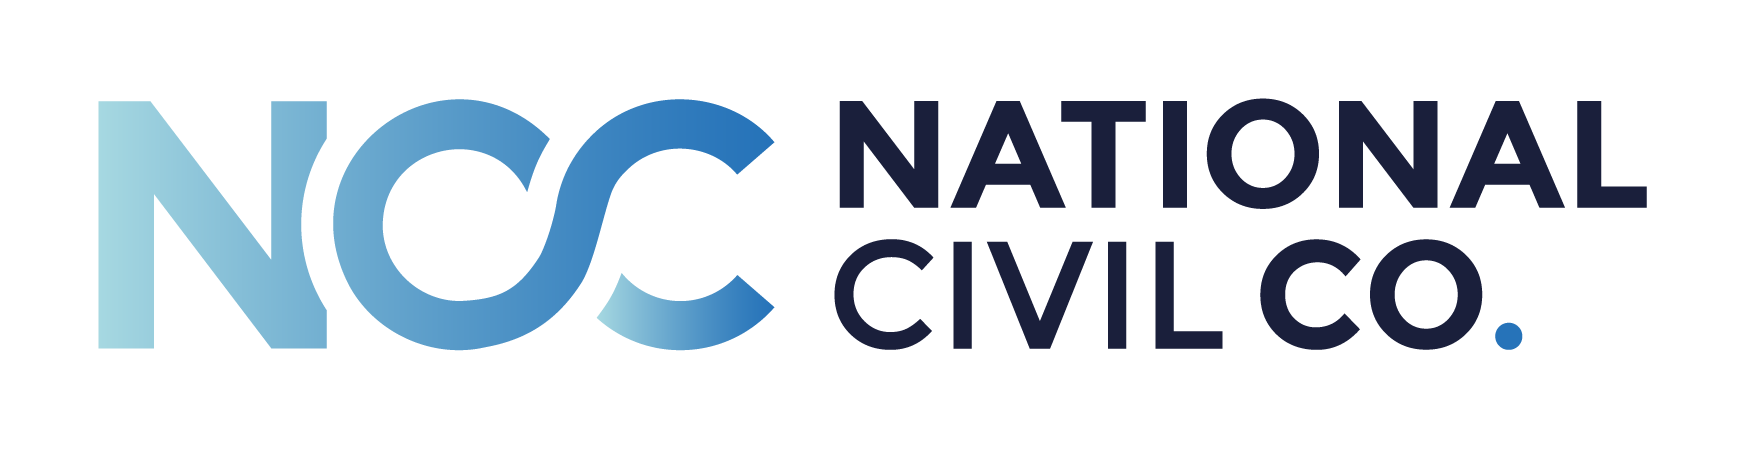 National Civil Co